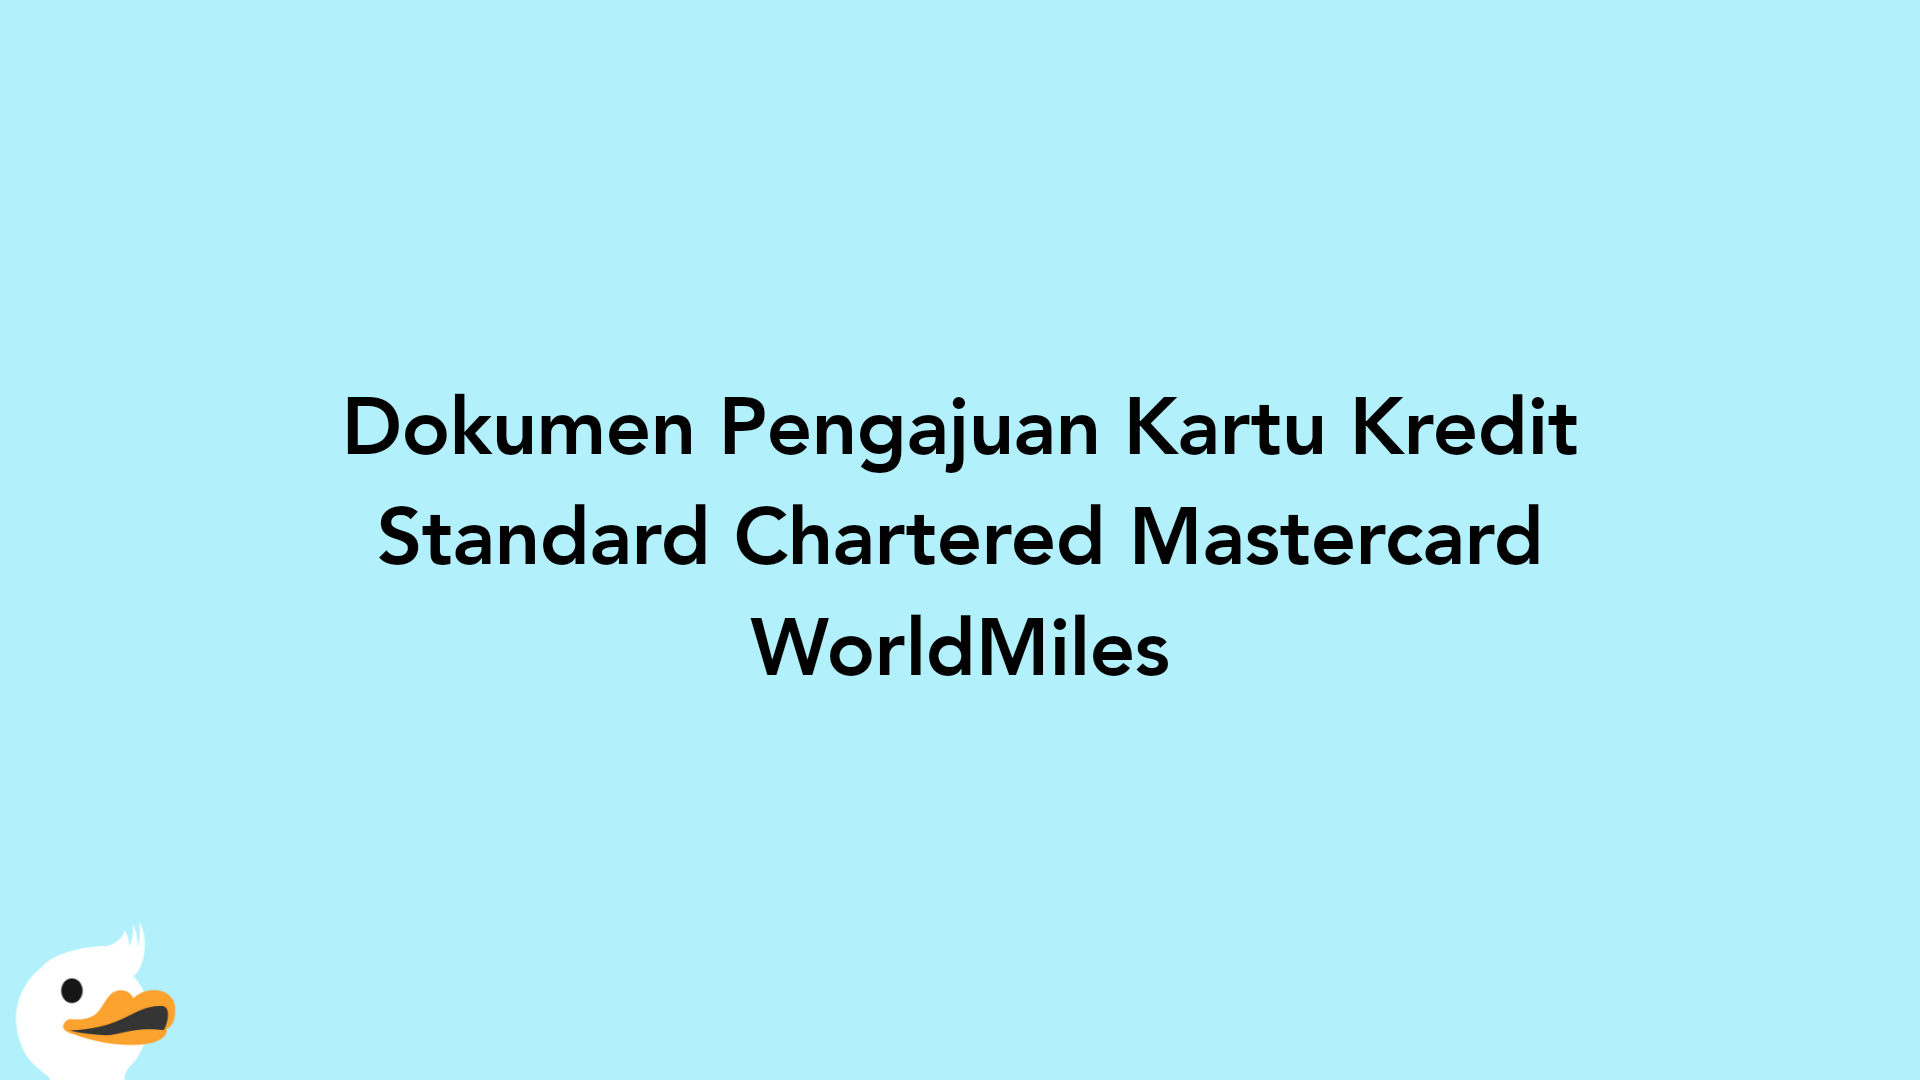 Dokumen Pengajuan Kartu Kredit Standard Chartered Mastercard WorldMiles